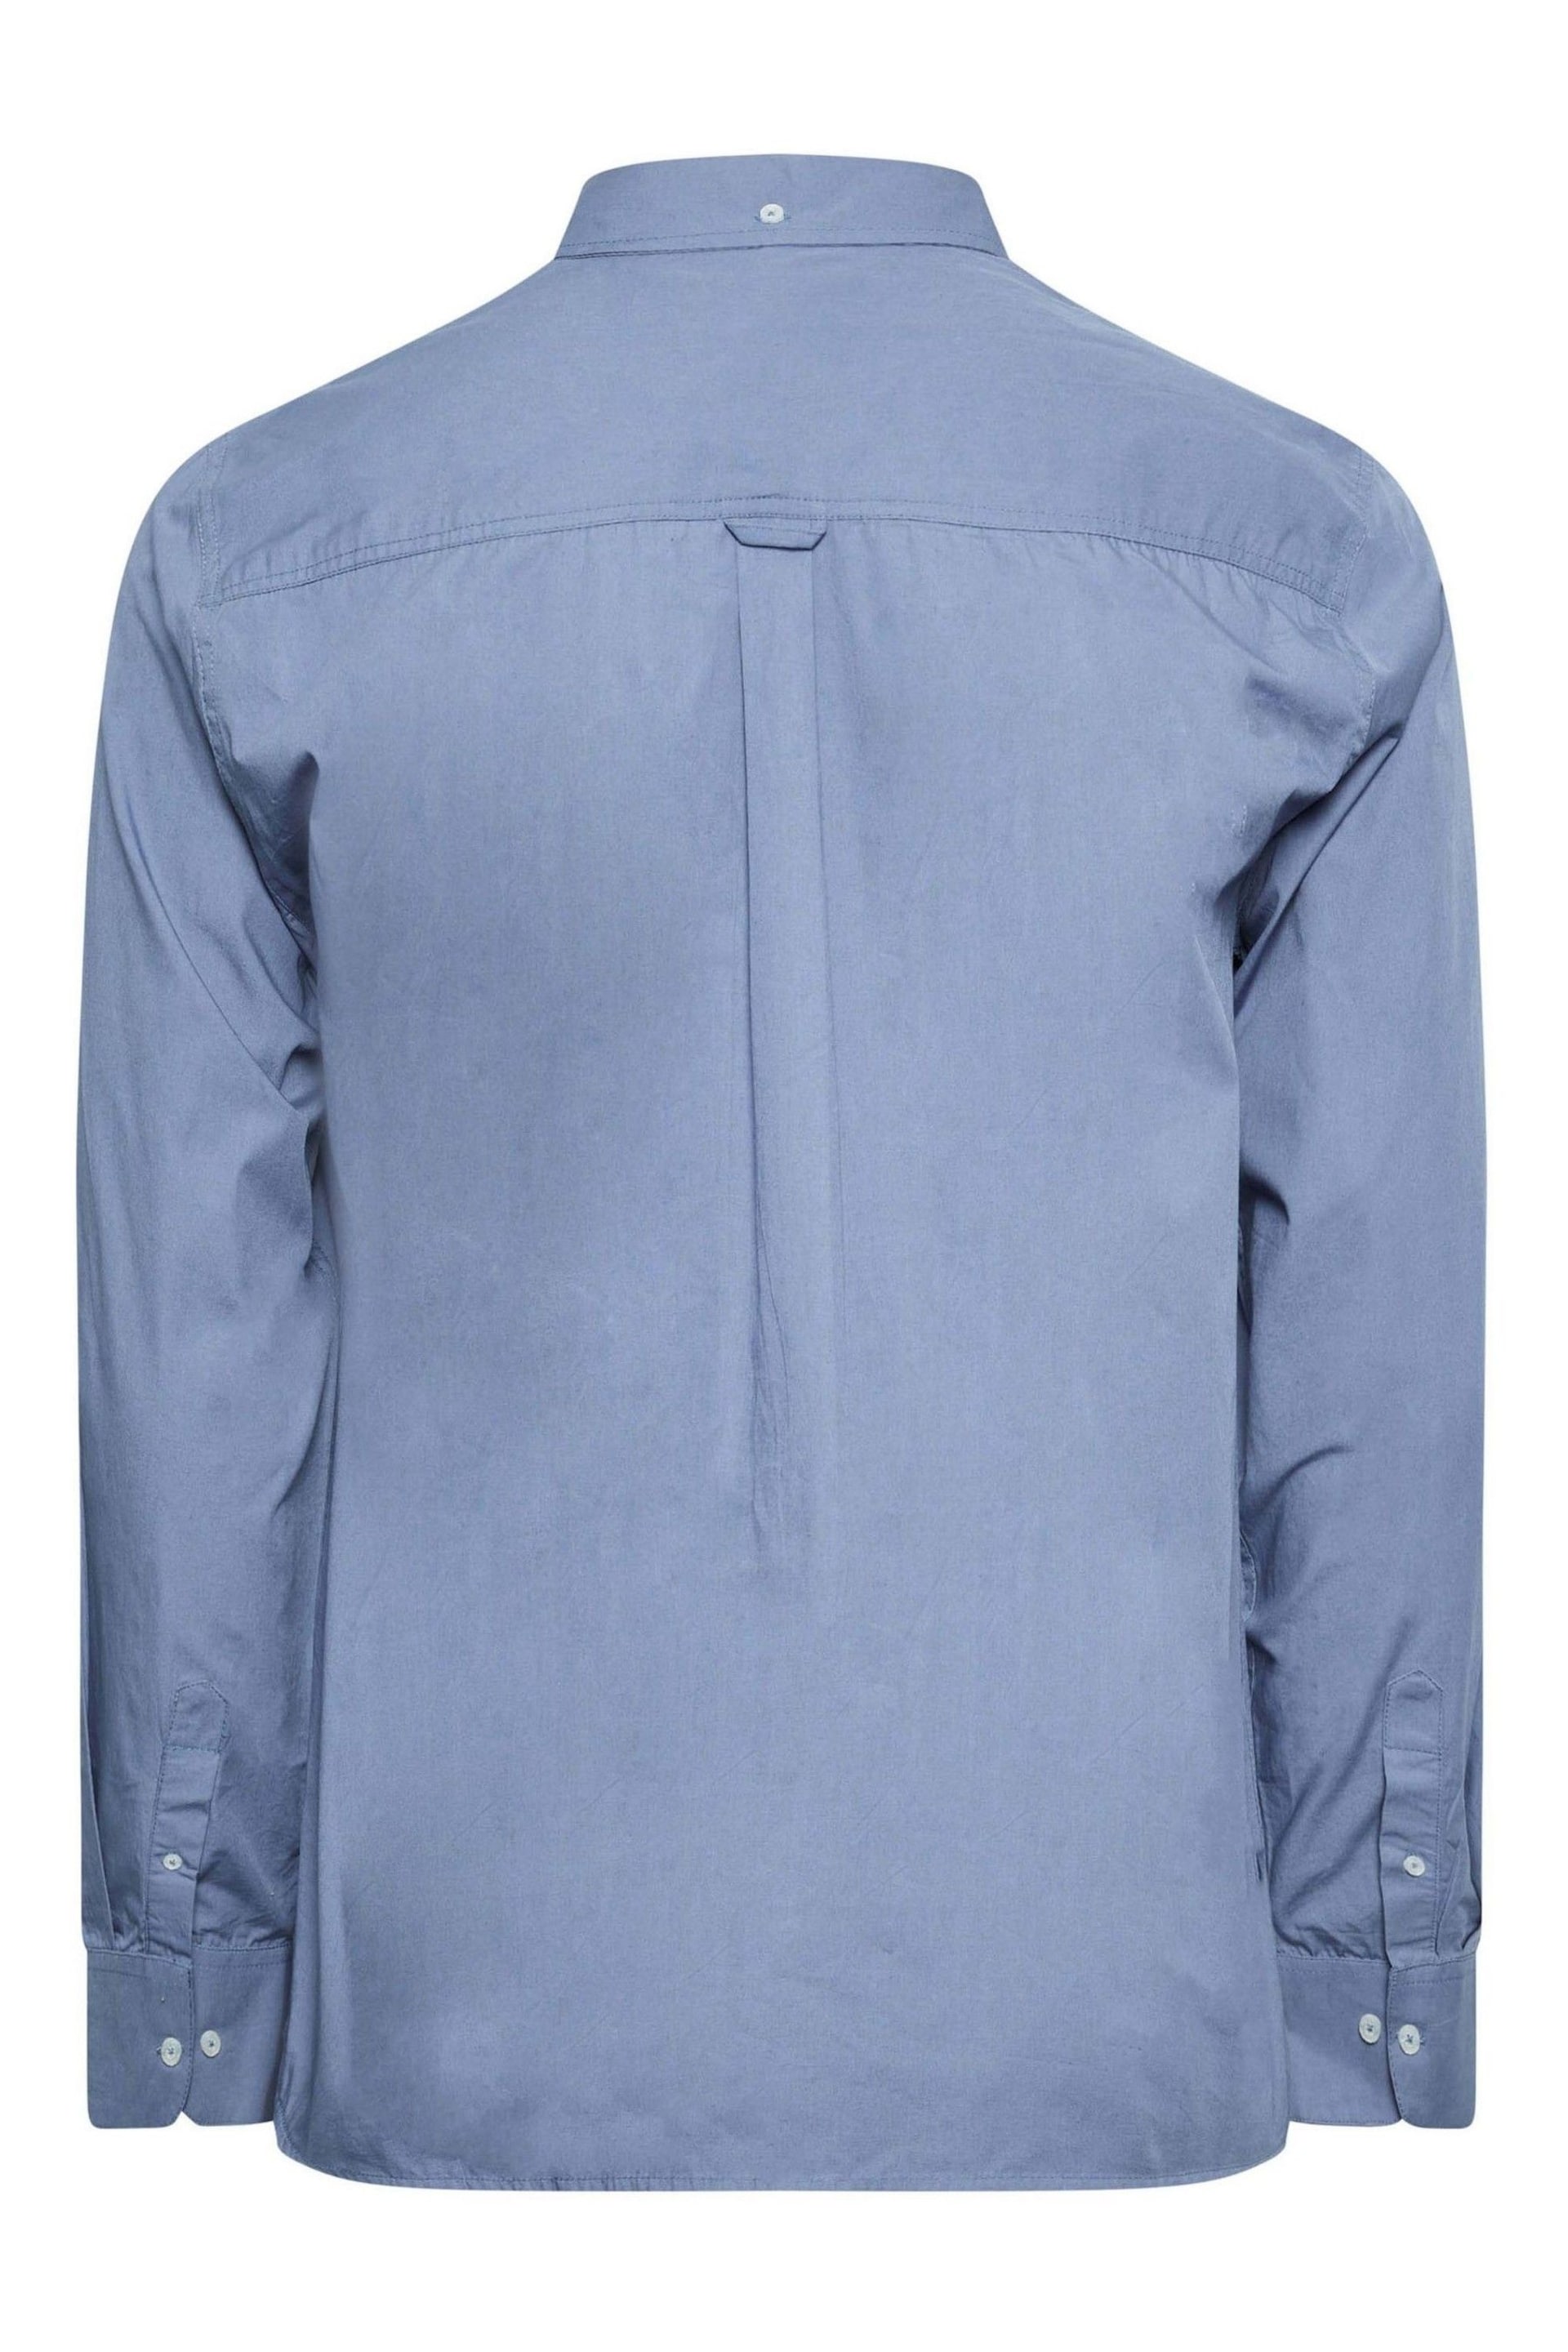 BadRhino Big & Tall Blue Long Sleeve Poplin Shirt - Image 3 of 3